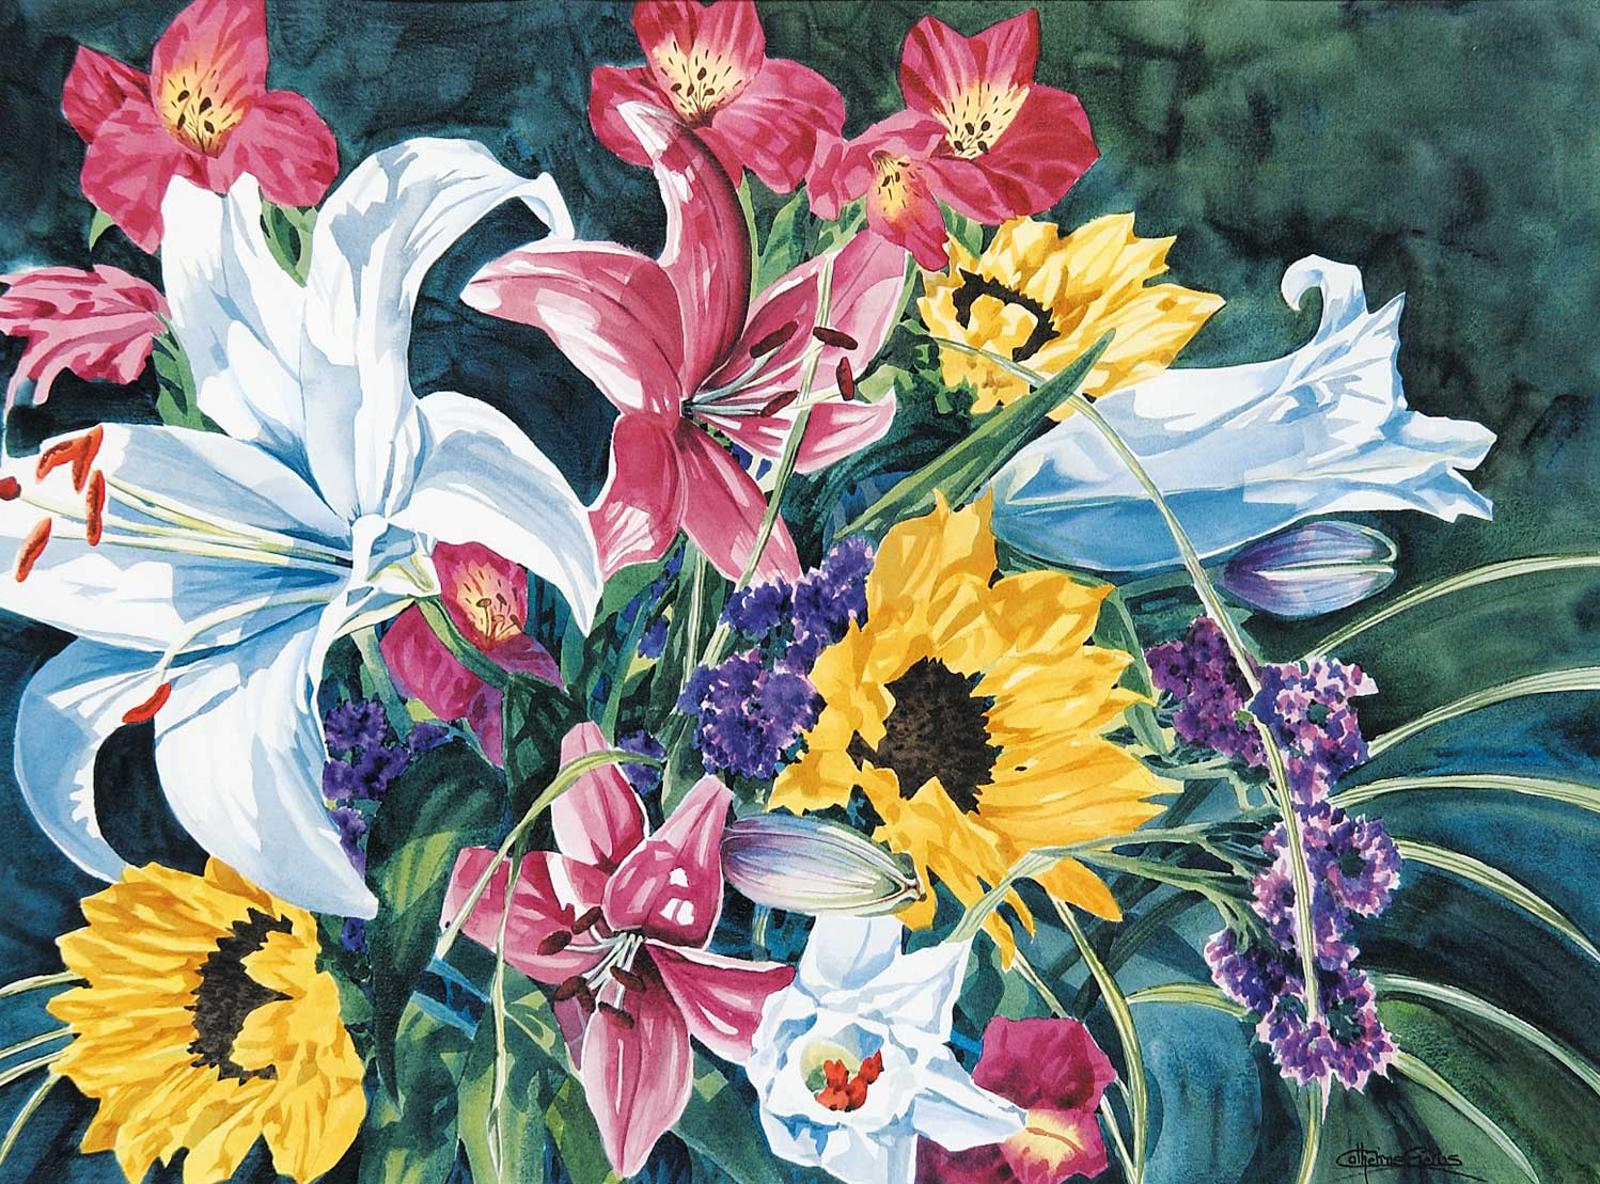 Catherine Gerus (1958) - Untitled - Flowers in Springtime